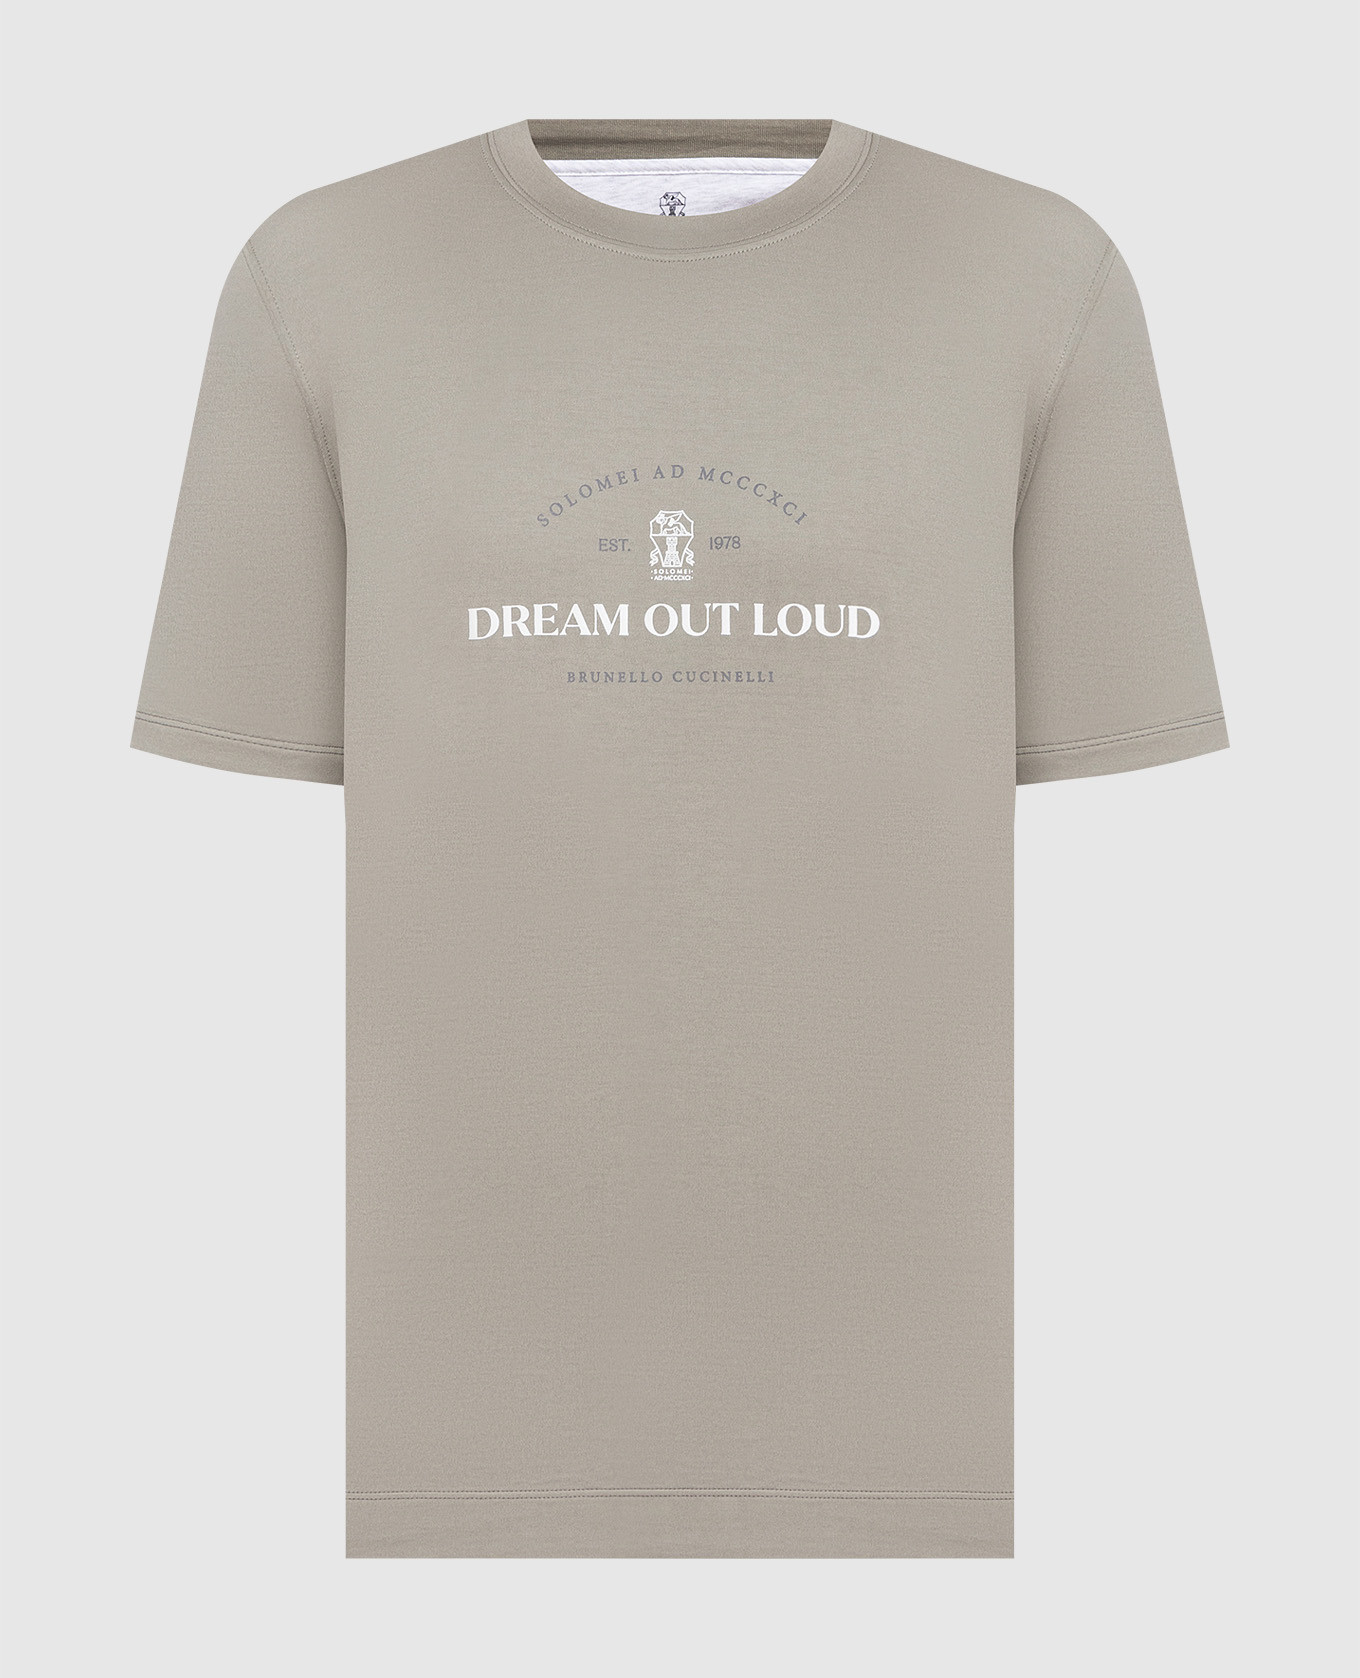 Khaki t-shirt with Dream out loud print